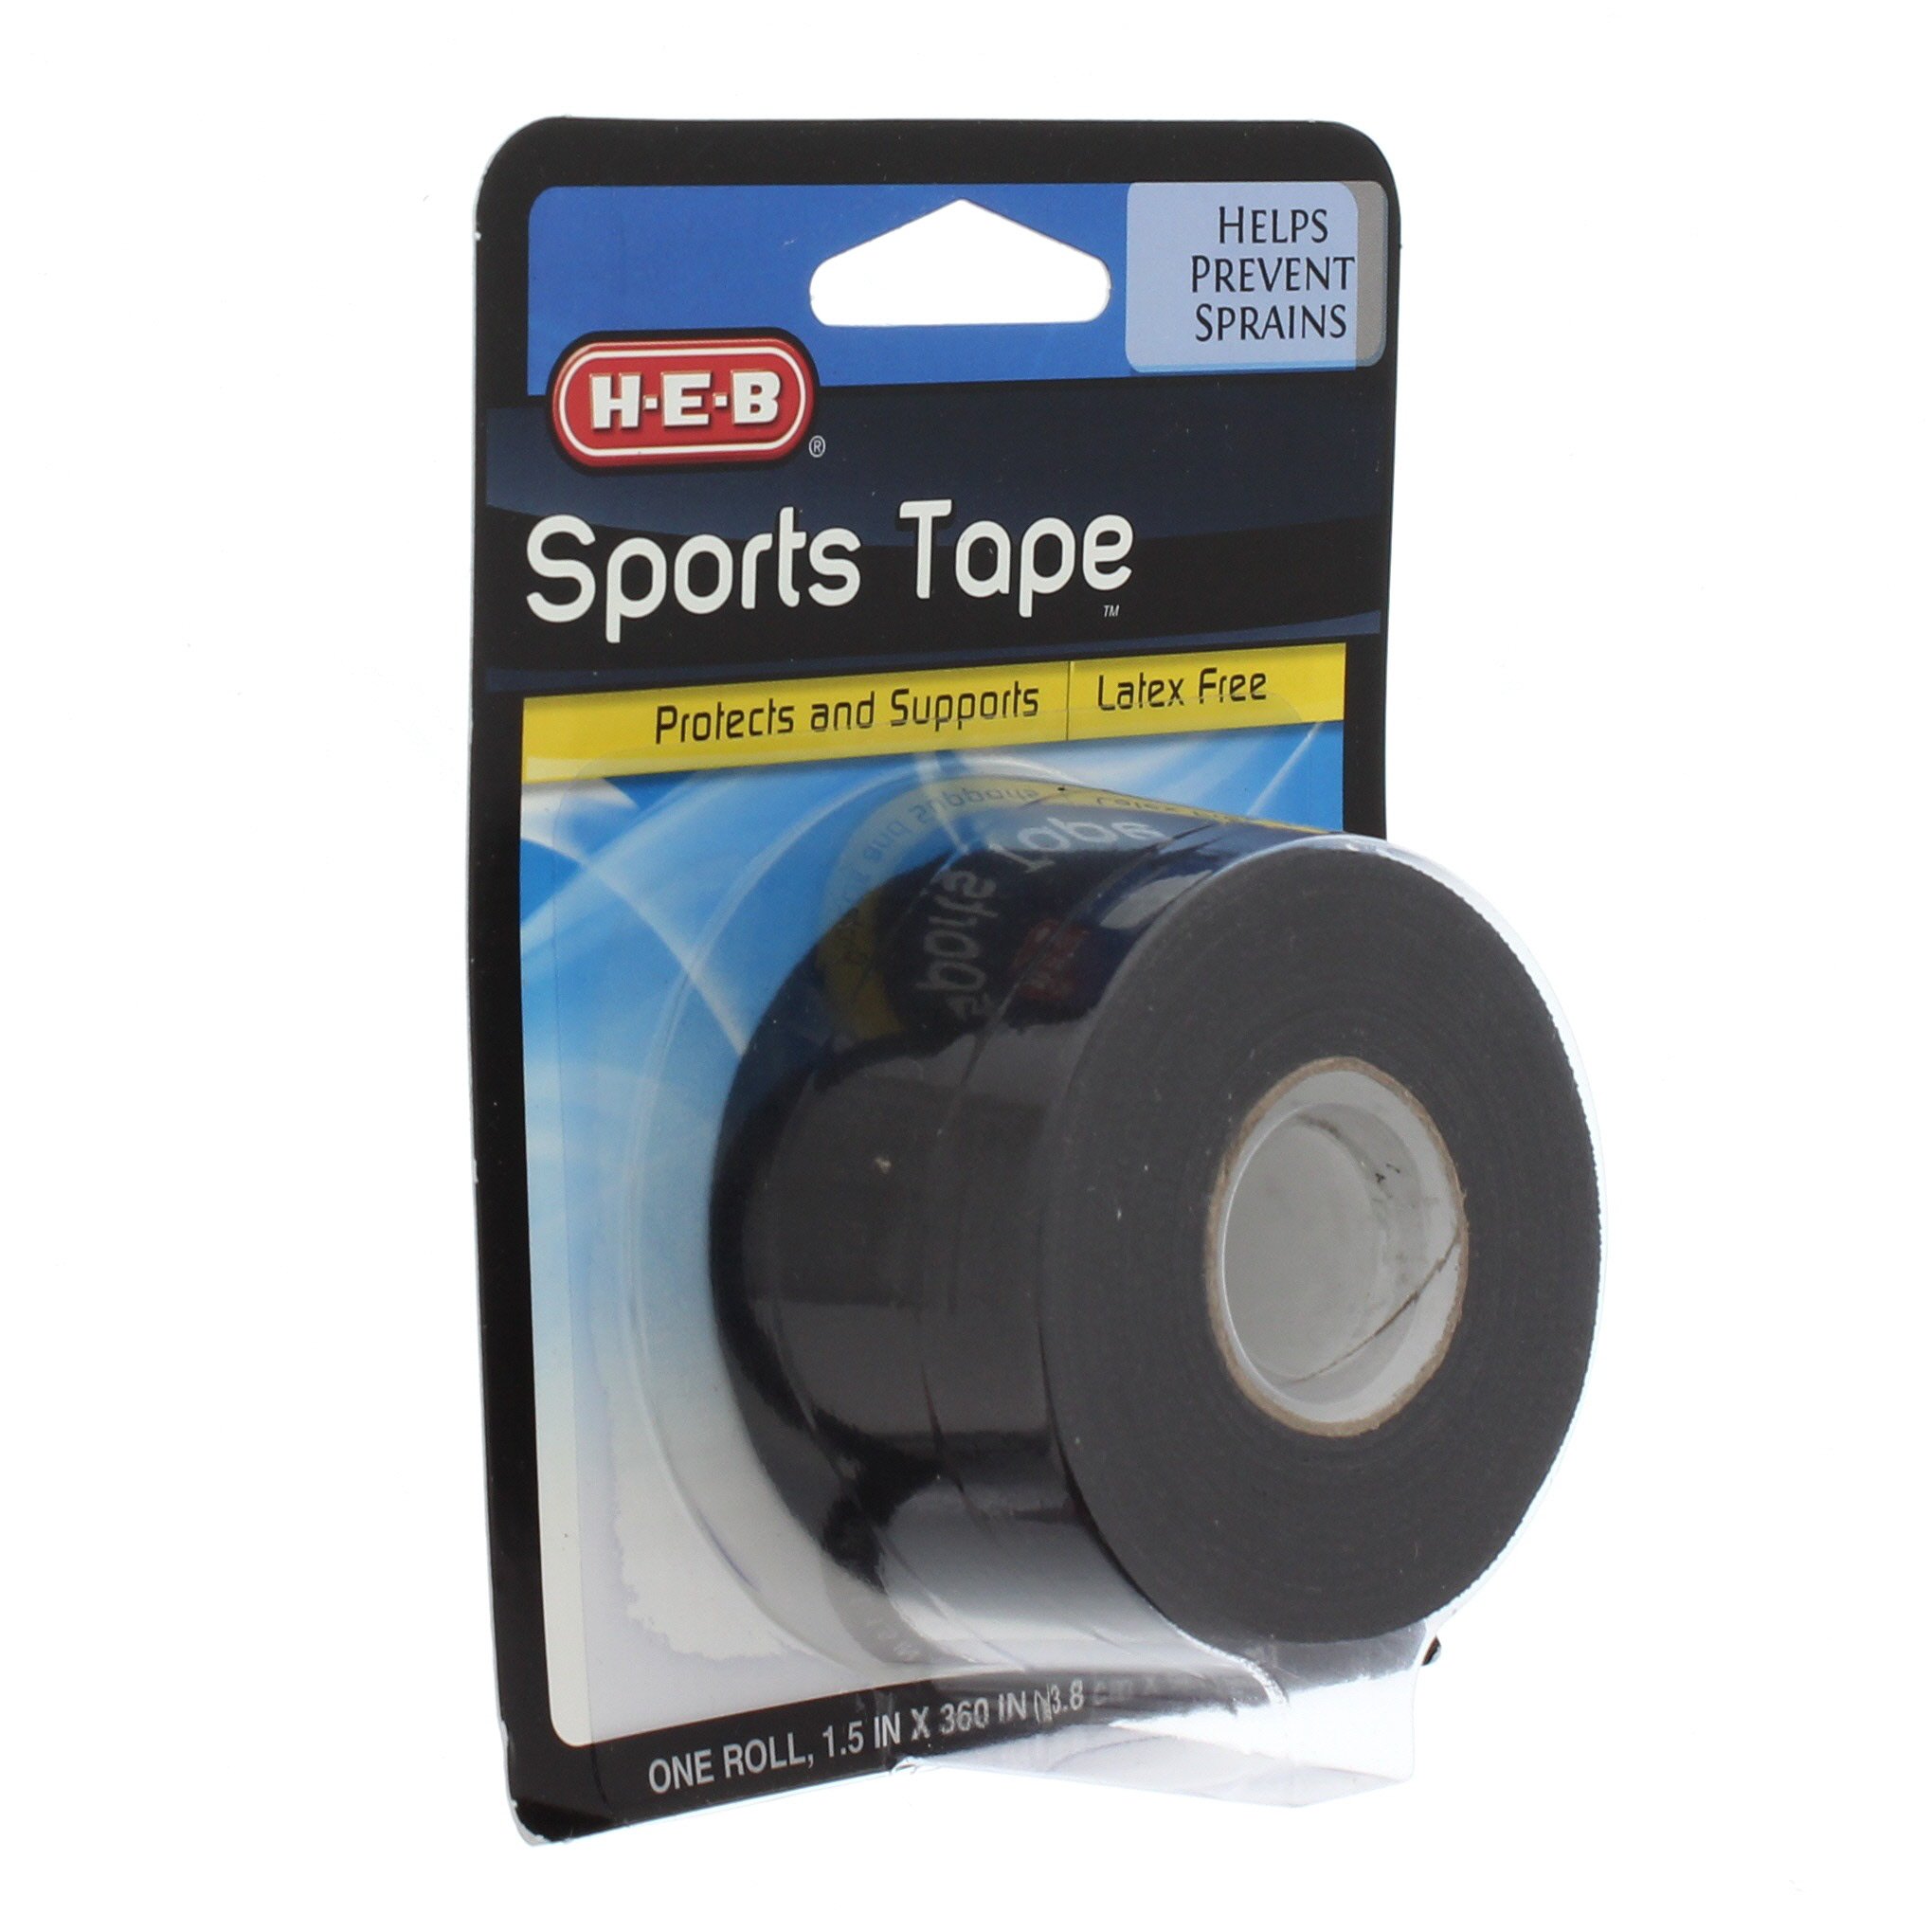 H-E-B Sports Tape - Shop Sleeves & Braces at H-E-B